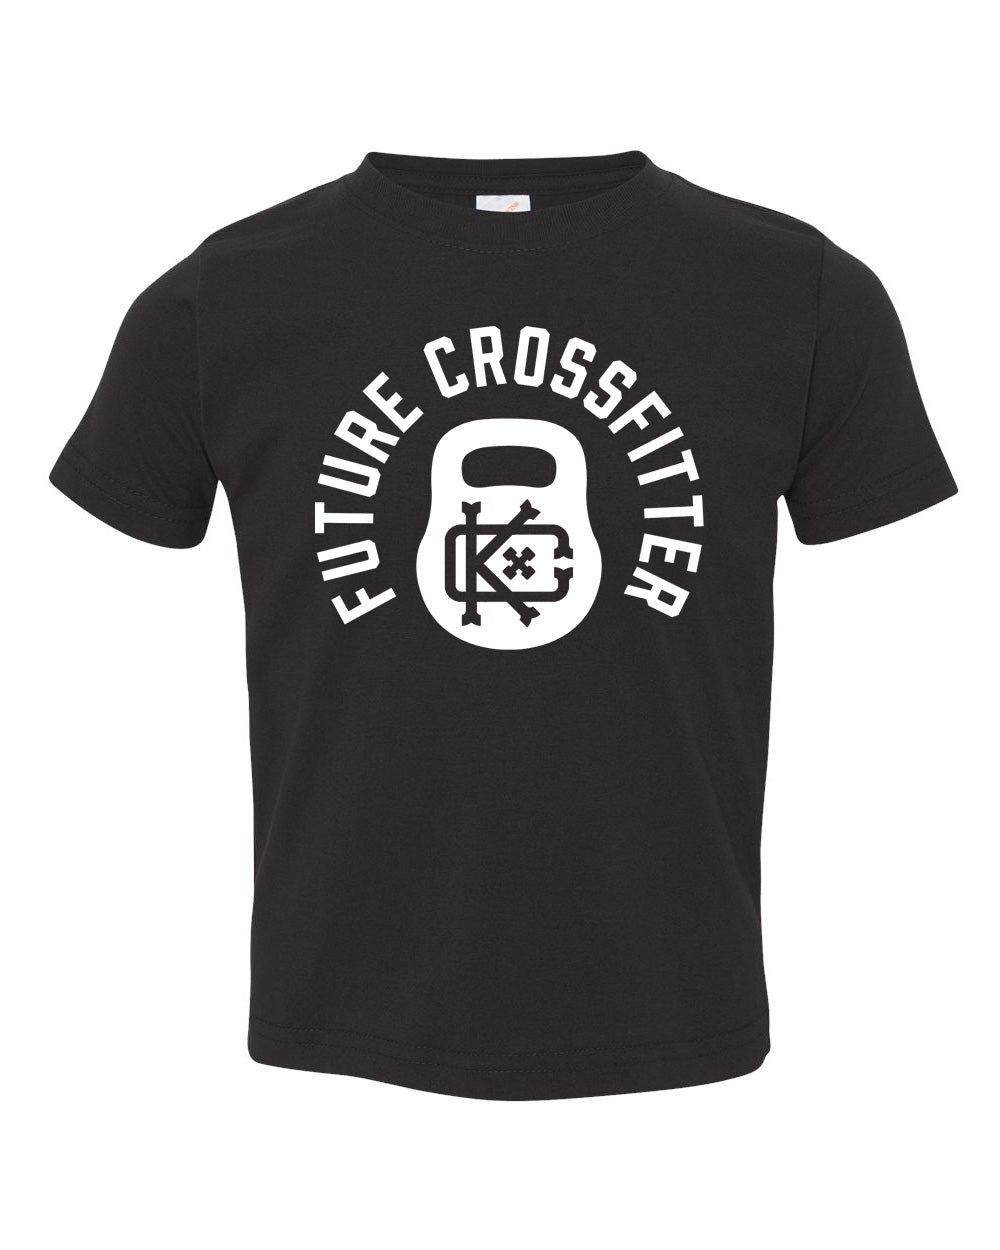 Future Crossfitter Kids Shirt